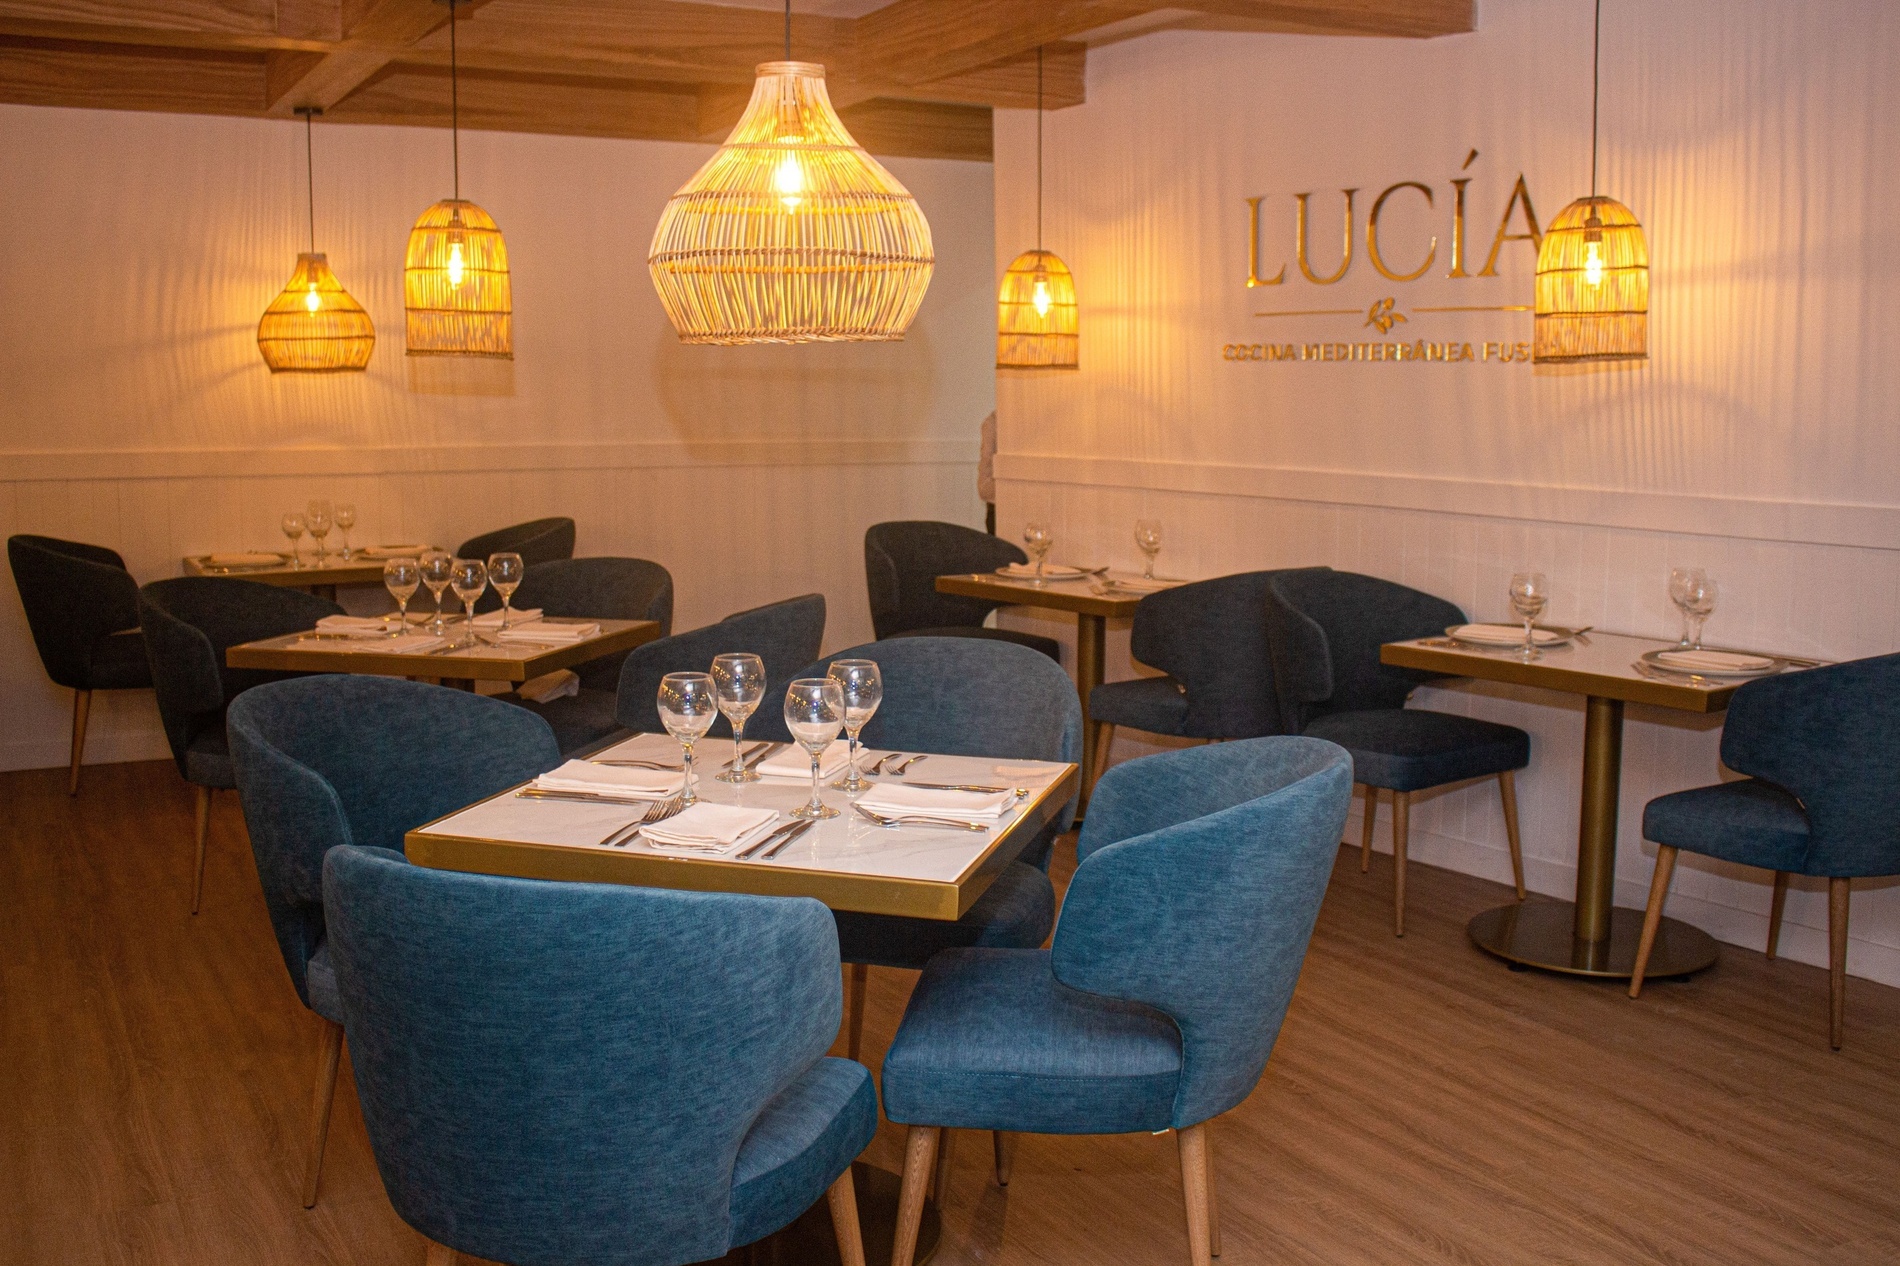 Lucia Restaurante